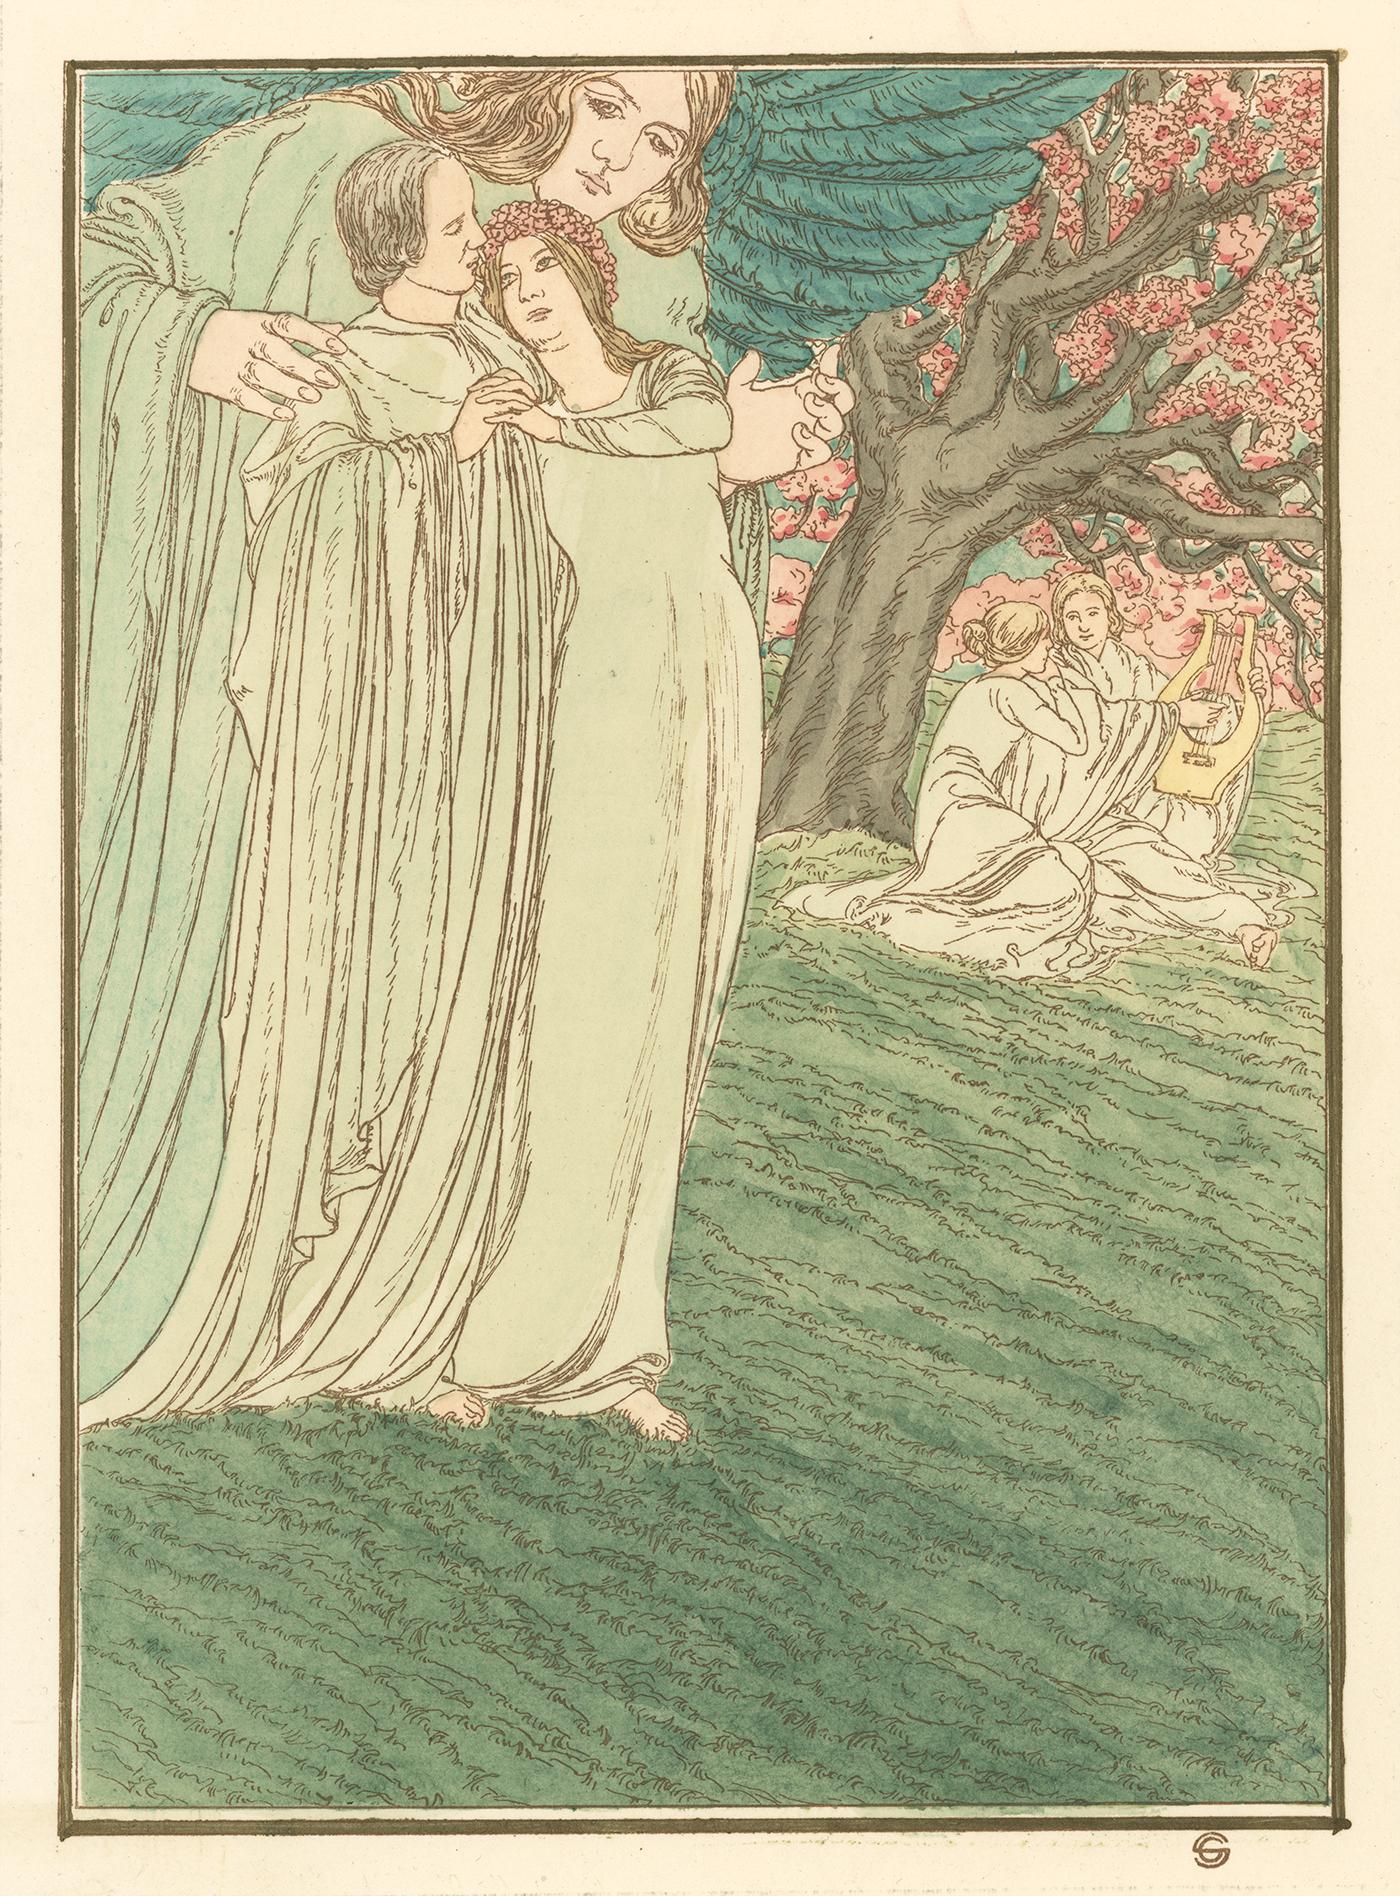 Illustration for Hésperus by Carlos Schwabe, Symbolist fantasy aquarelle, 1904